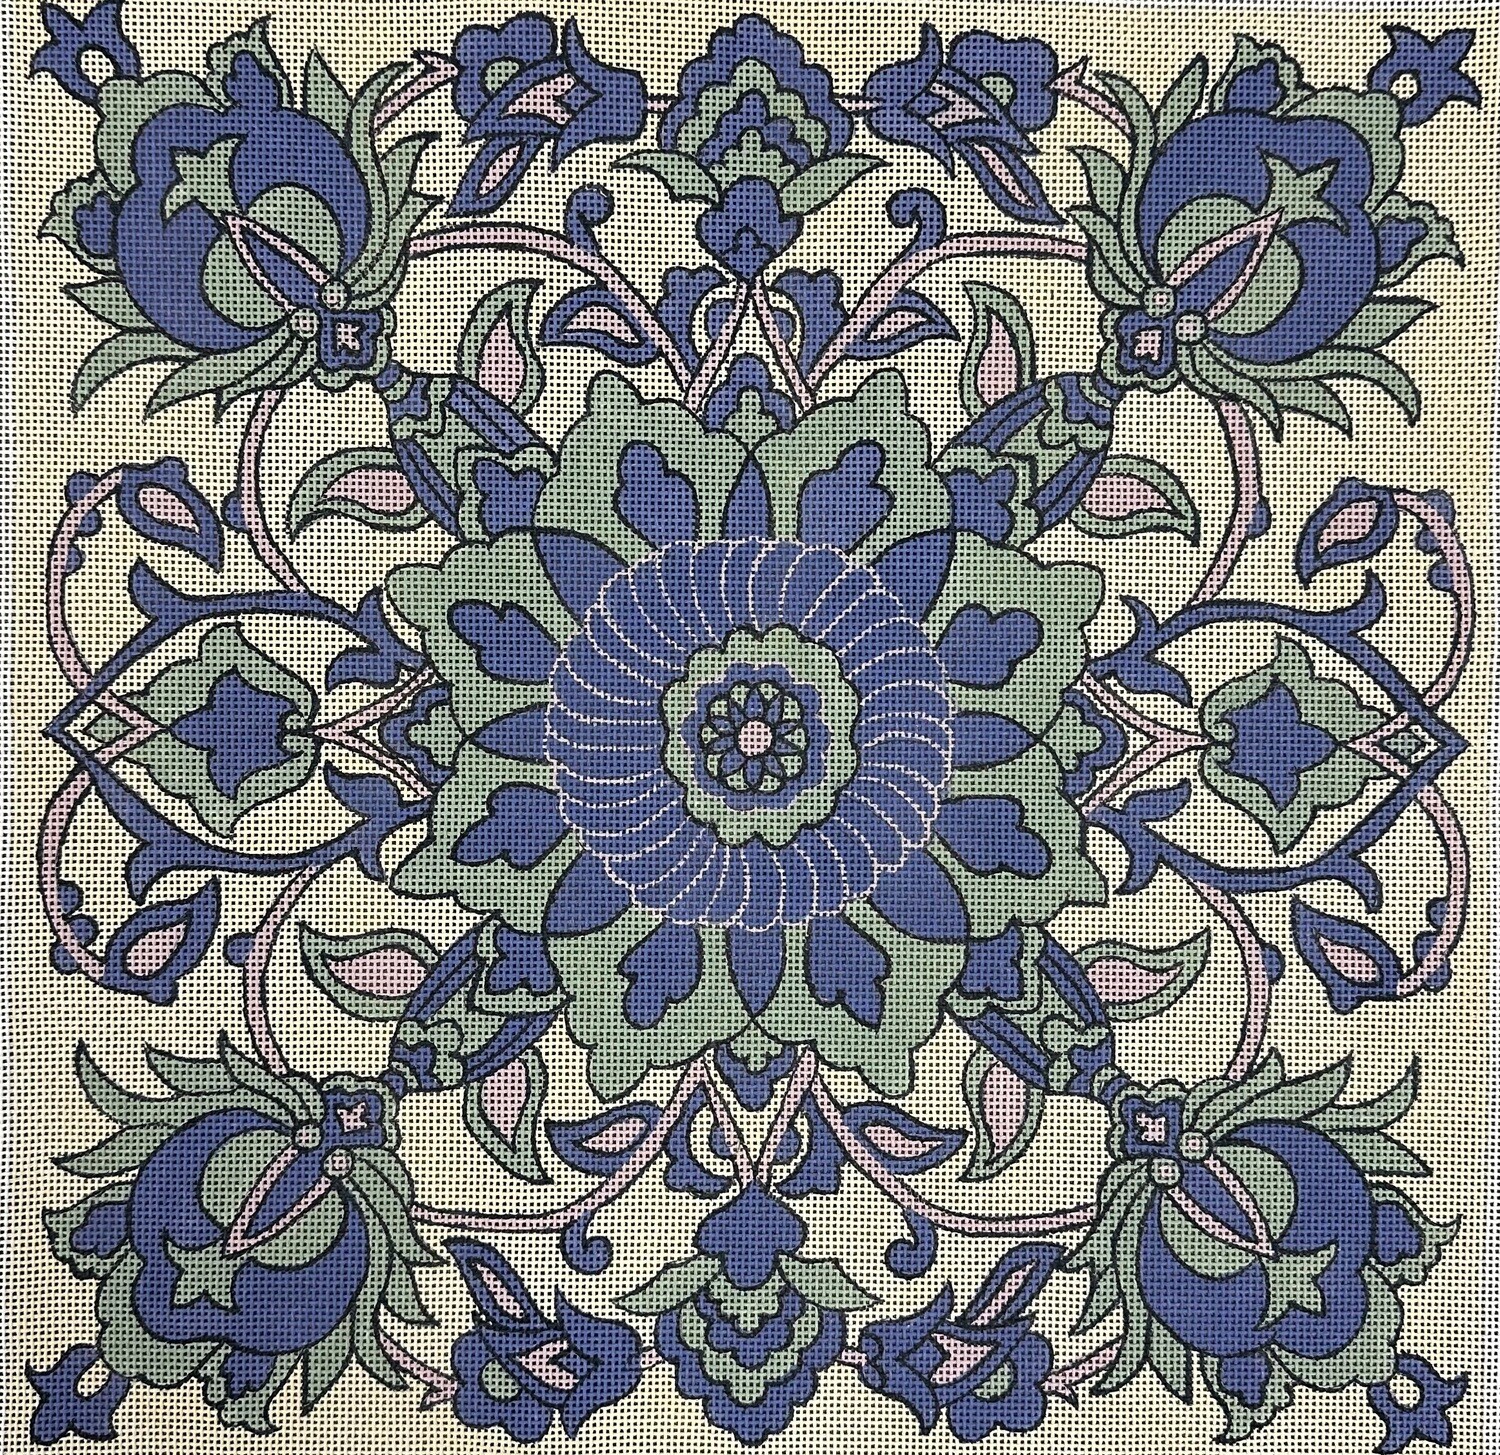 Persian Tile (Handpainted by V N G)